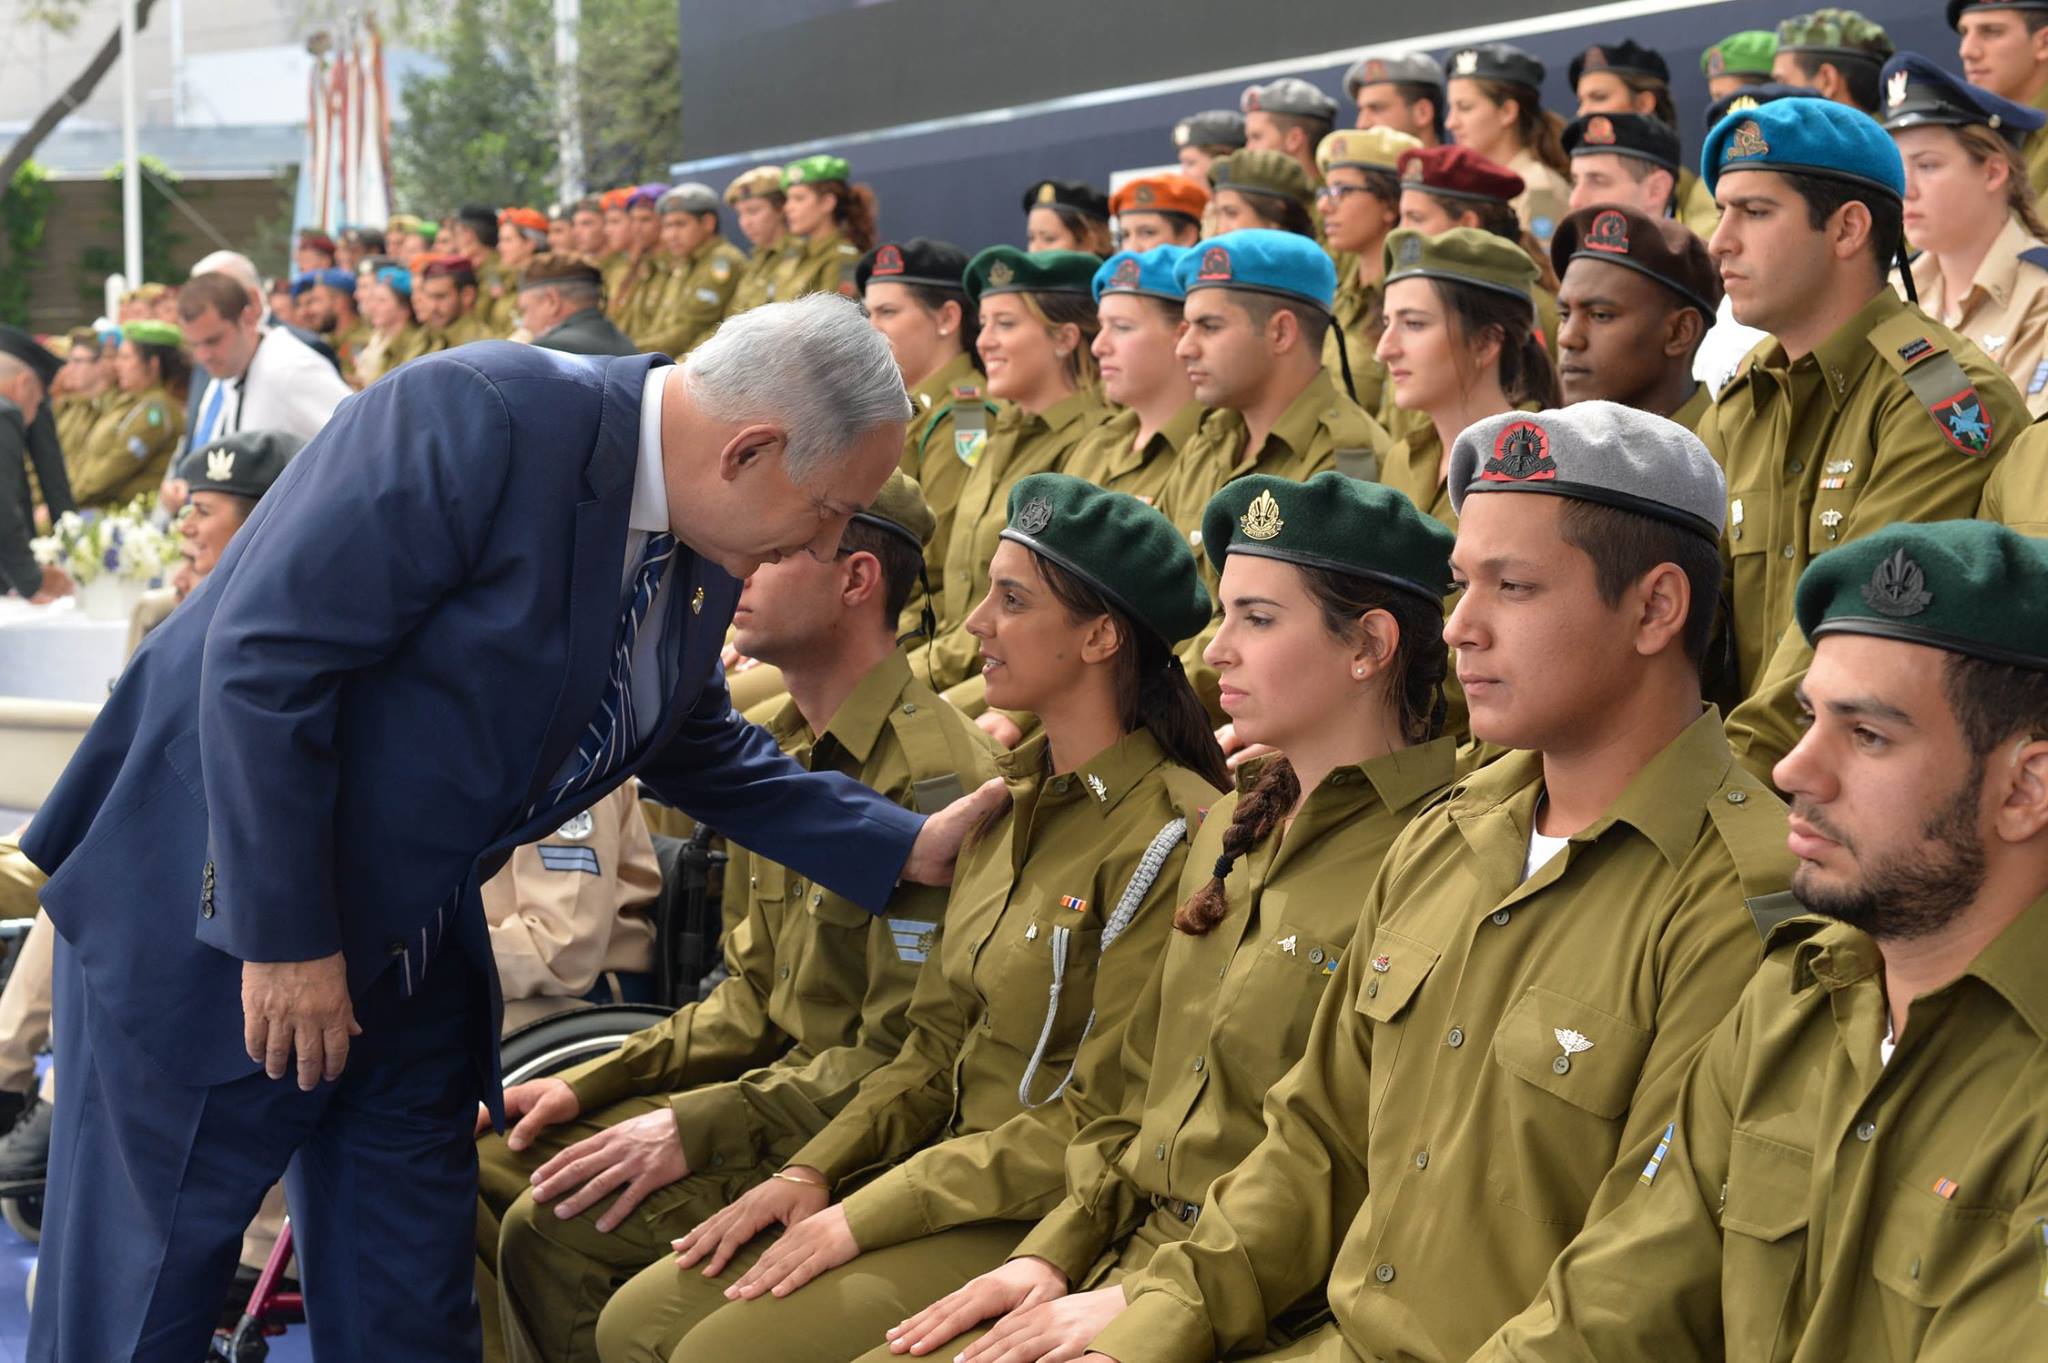 Netanyahu congratulates troops